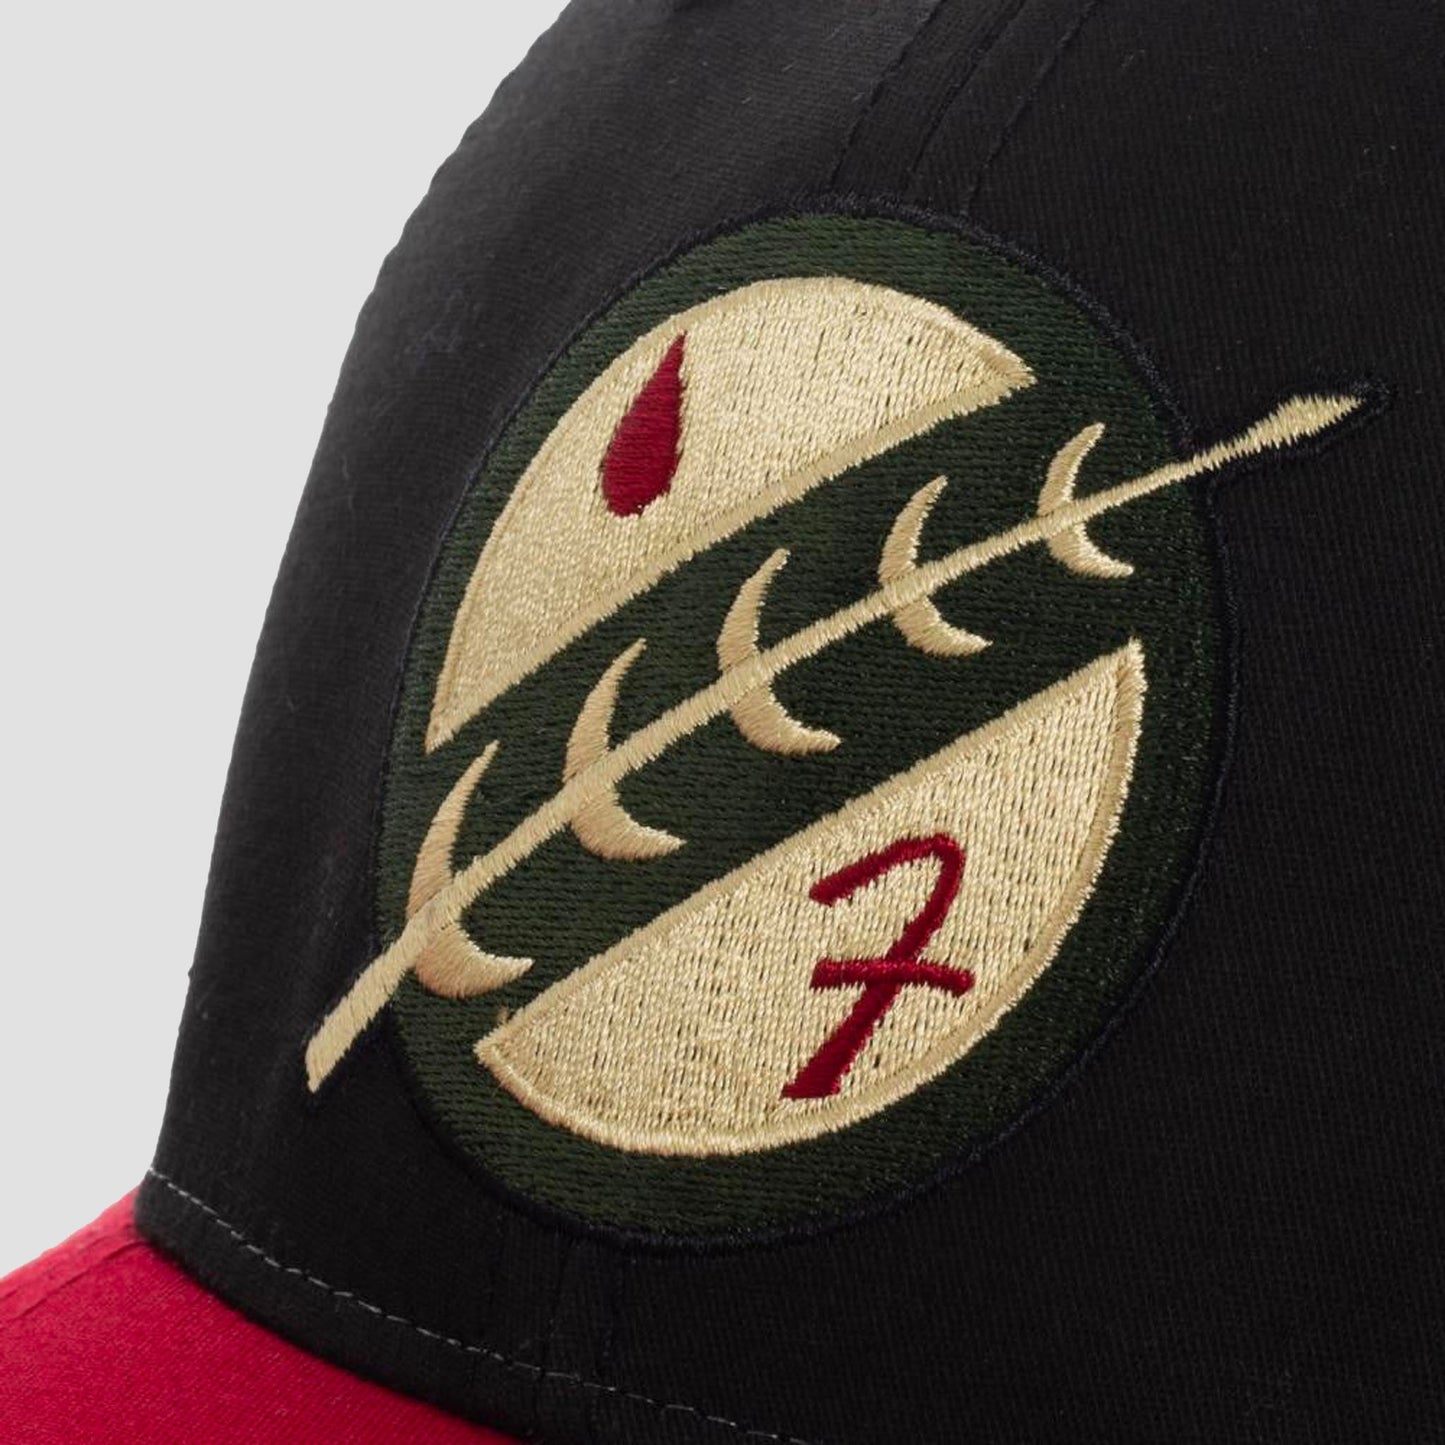 Boba Fett (Star Wars) Embroidered Flex Hat